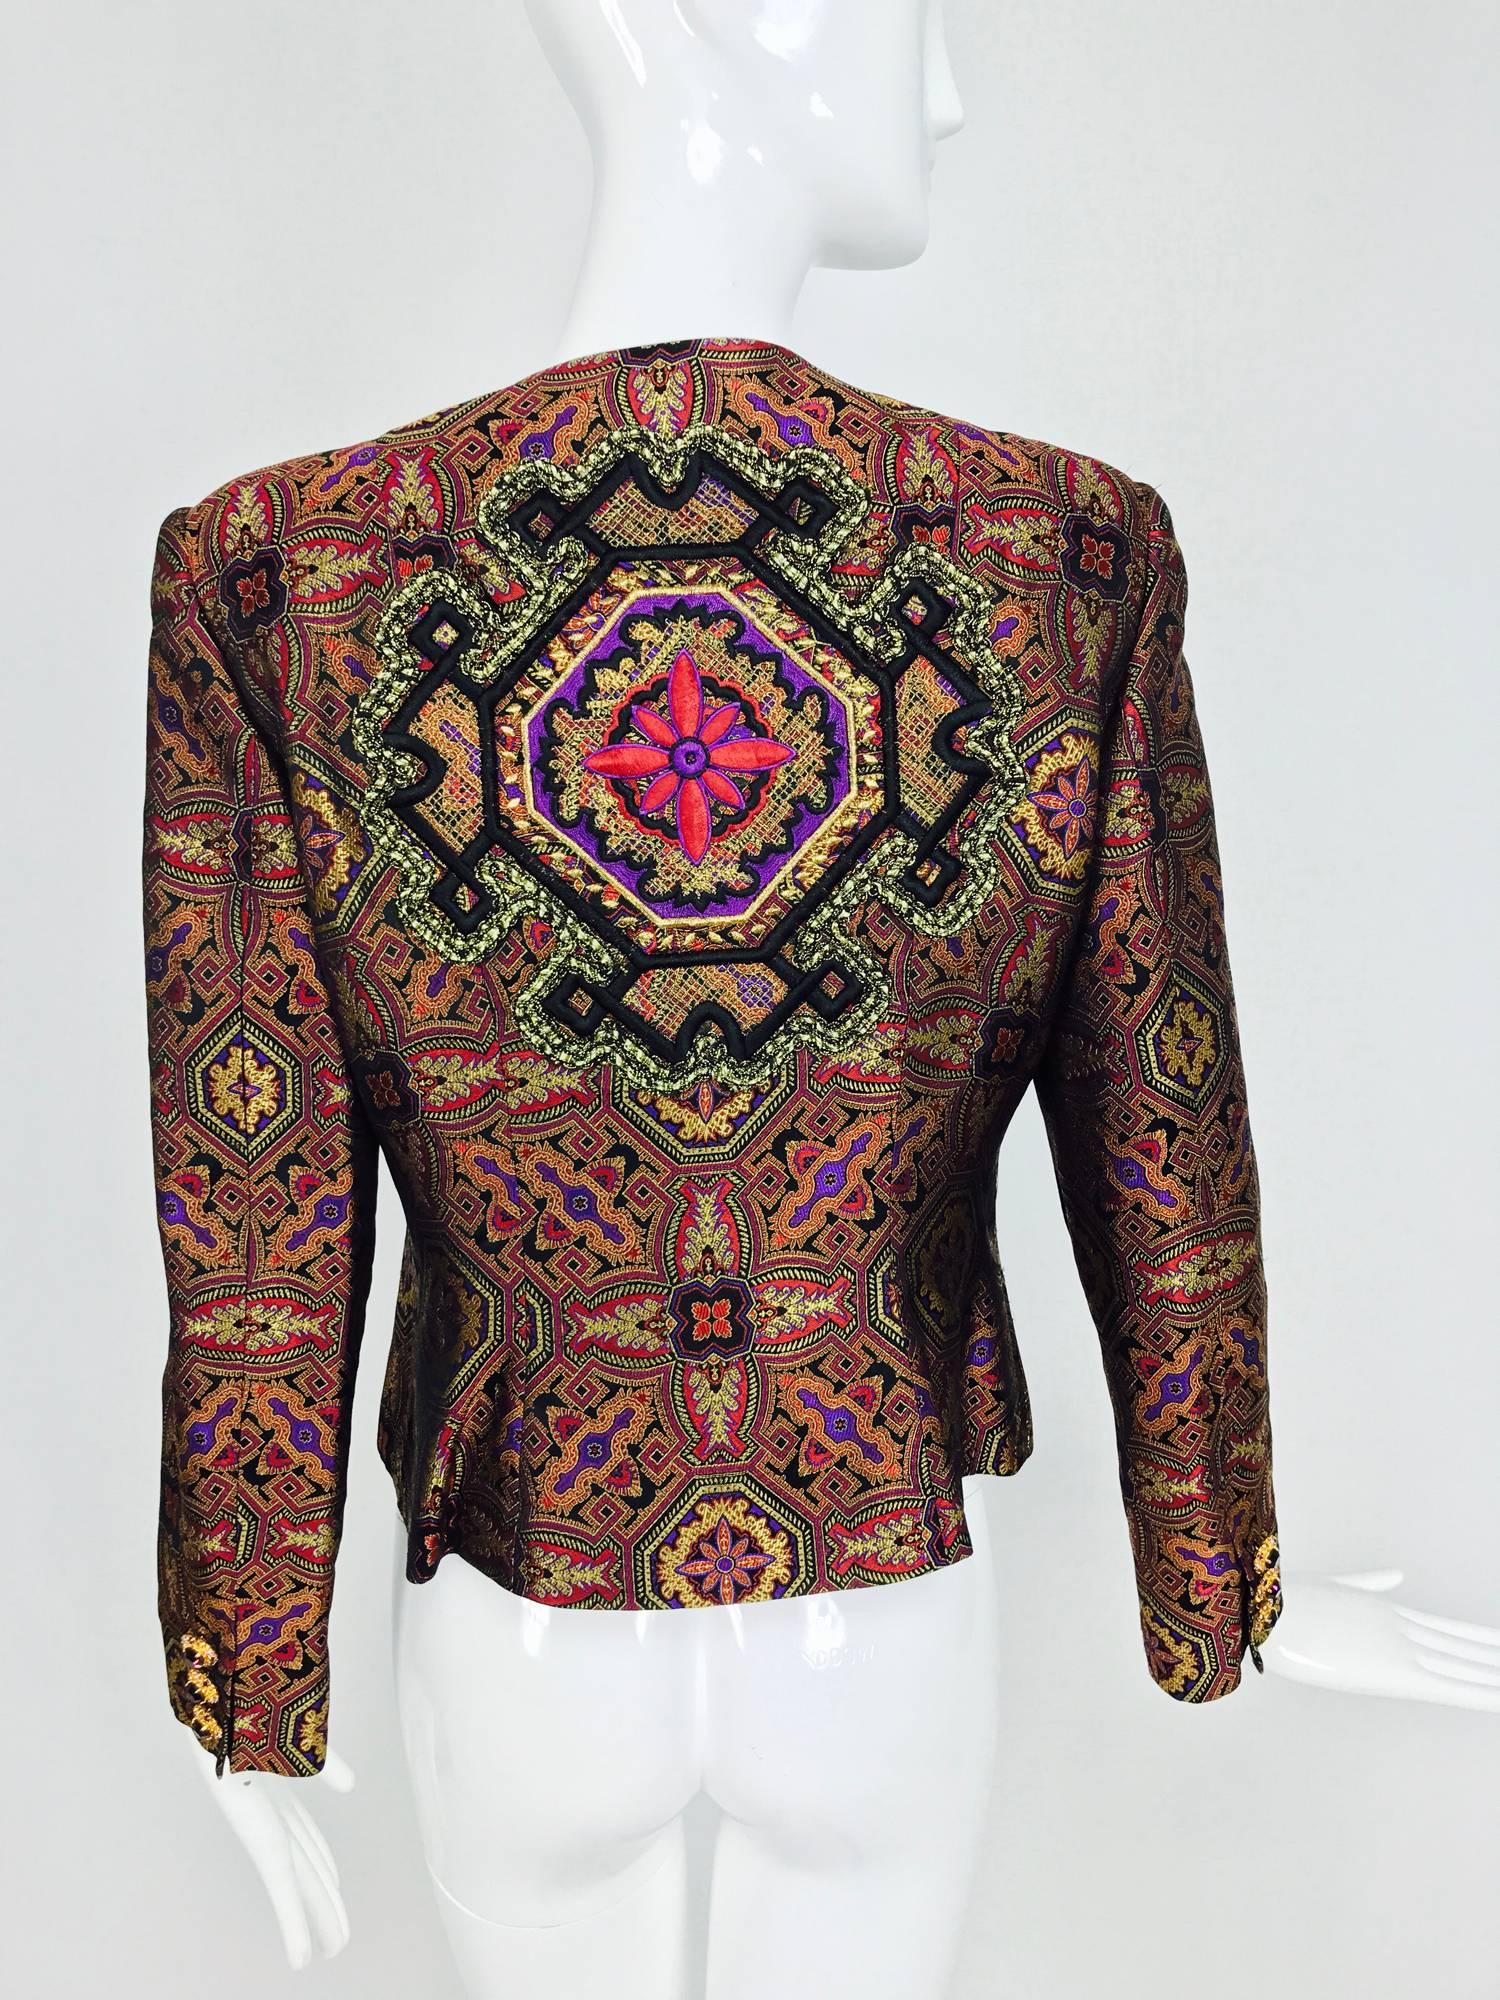 Women's Vintage Christian LaCroix jewel tone brocade jacket jewel buttons 1980s